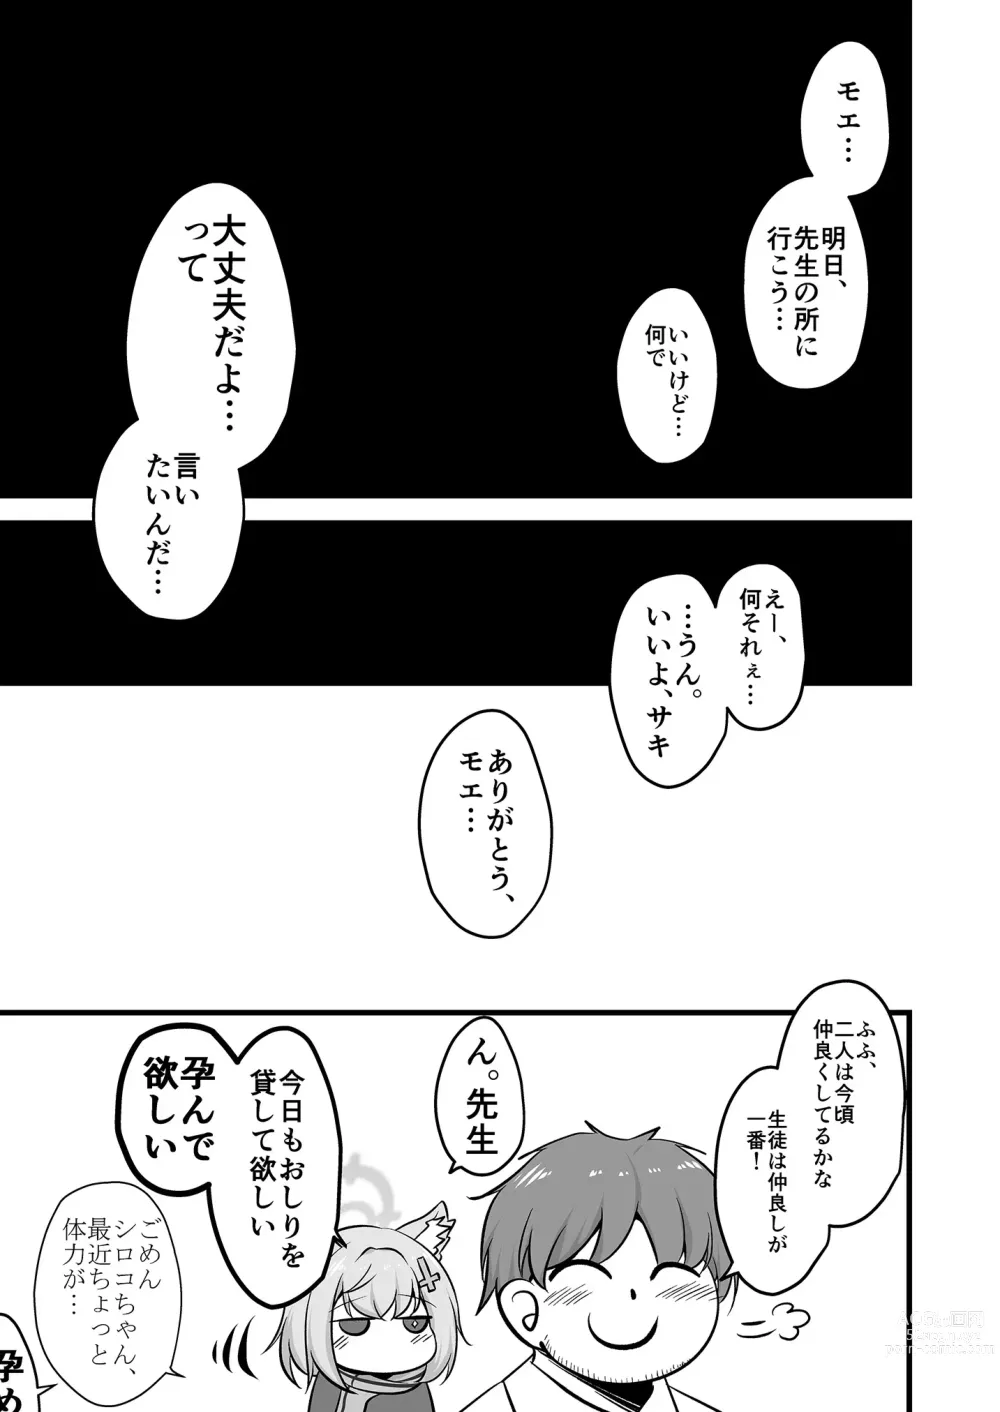 Page 46 of doujinshi Sakimoeizumu